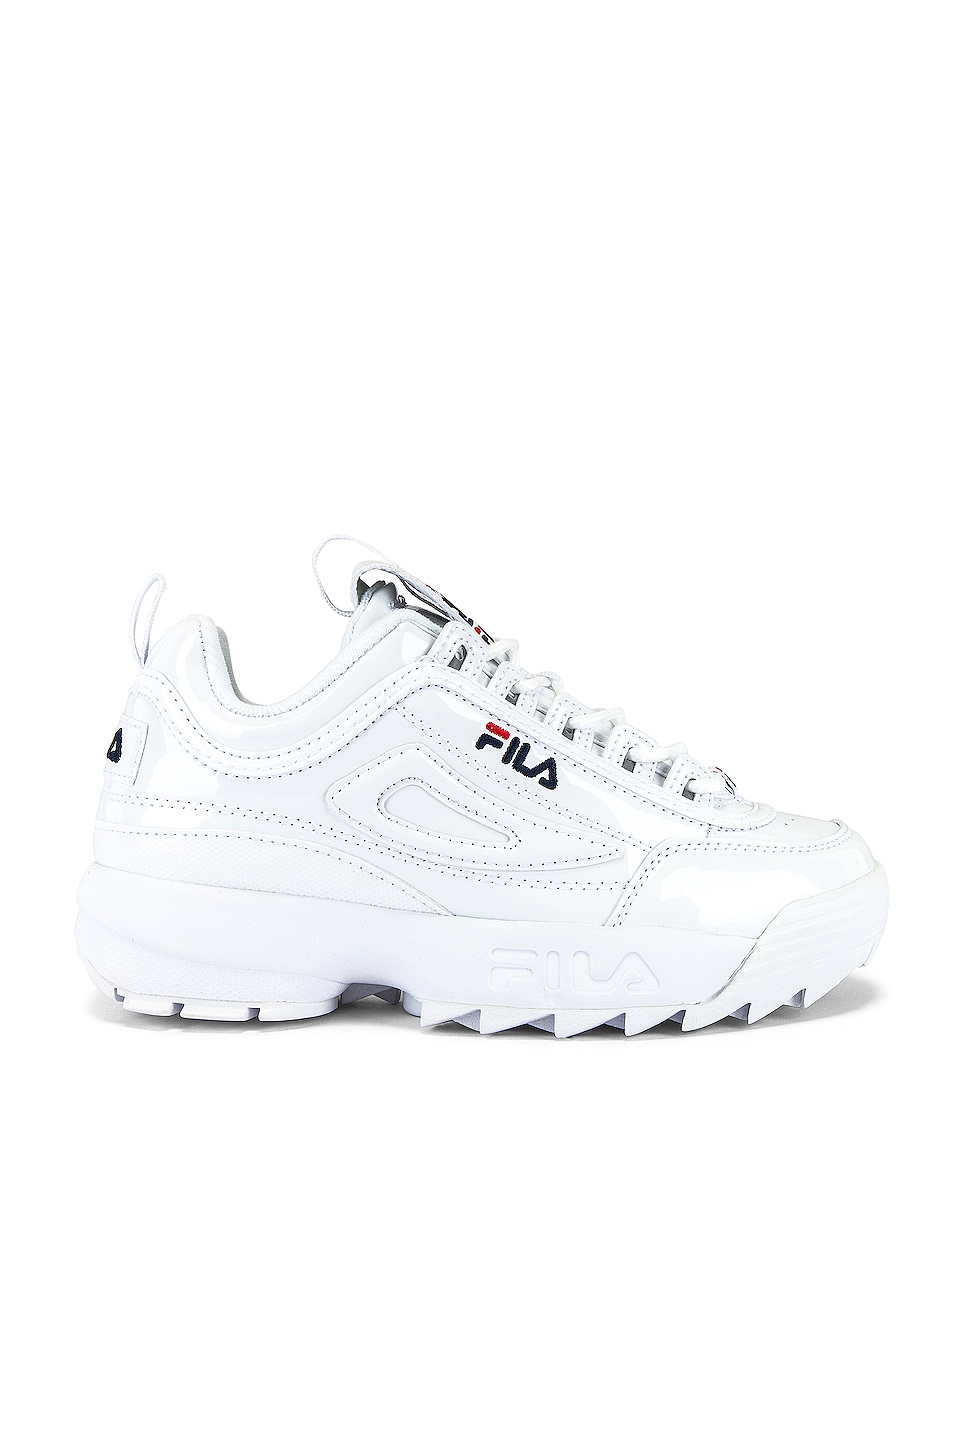 Fila Disruptor II Premium Sneaker in 